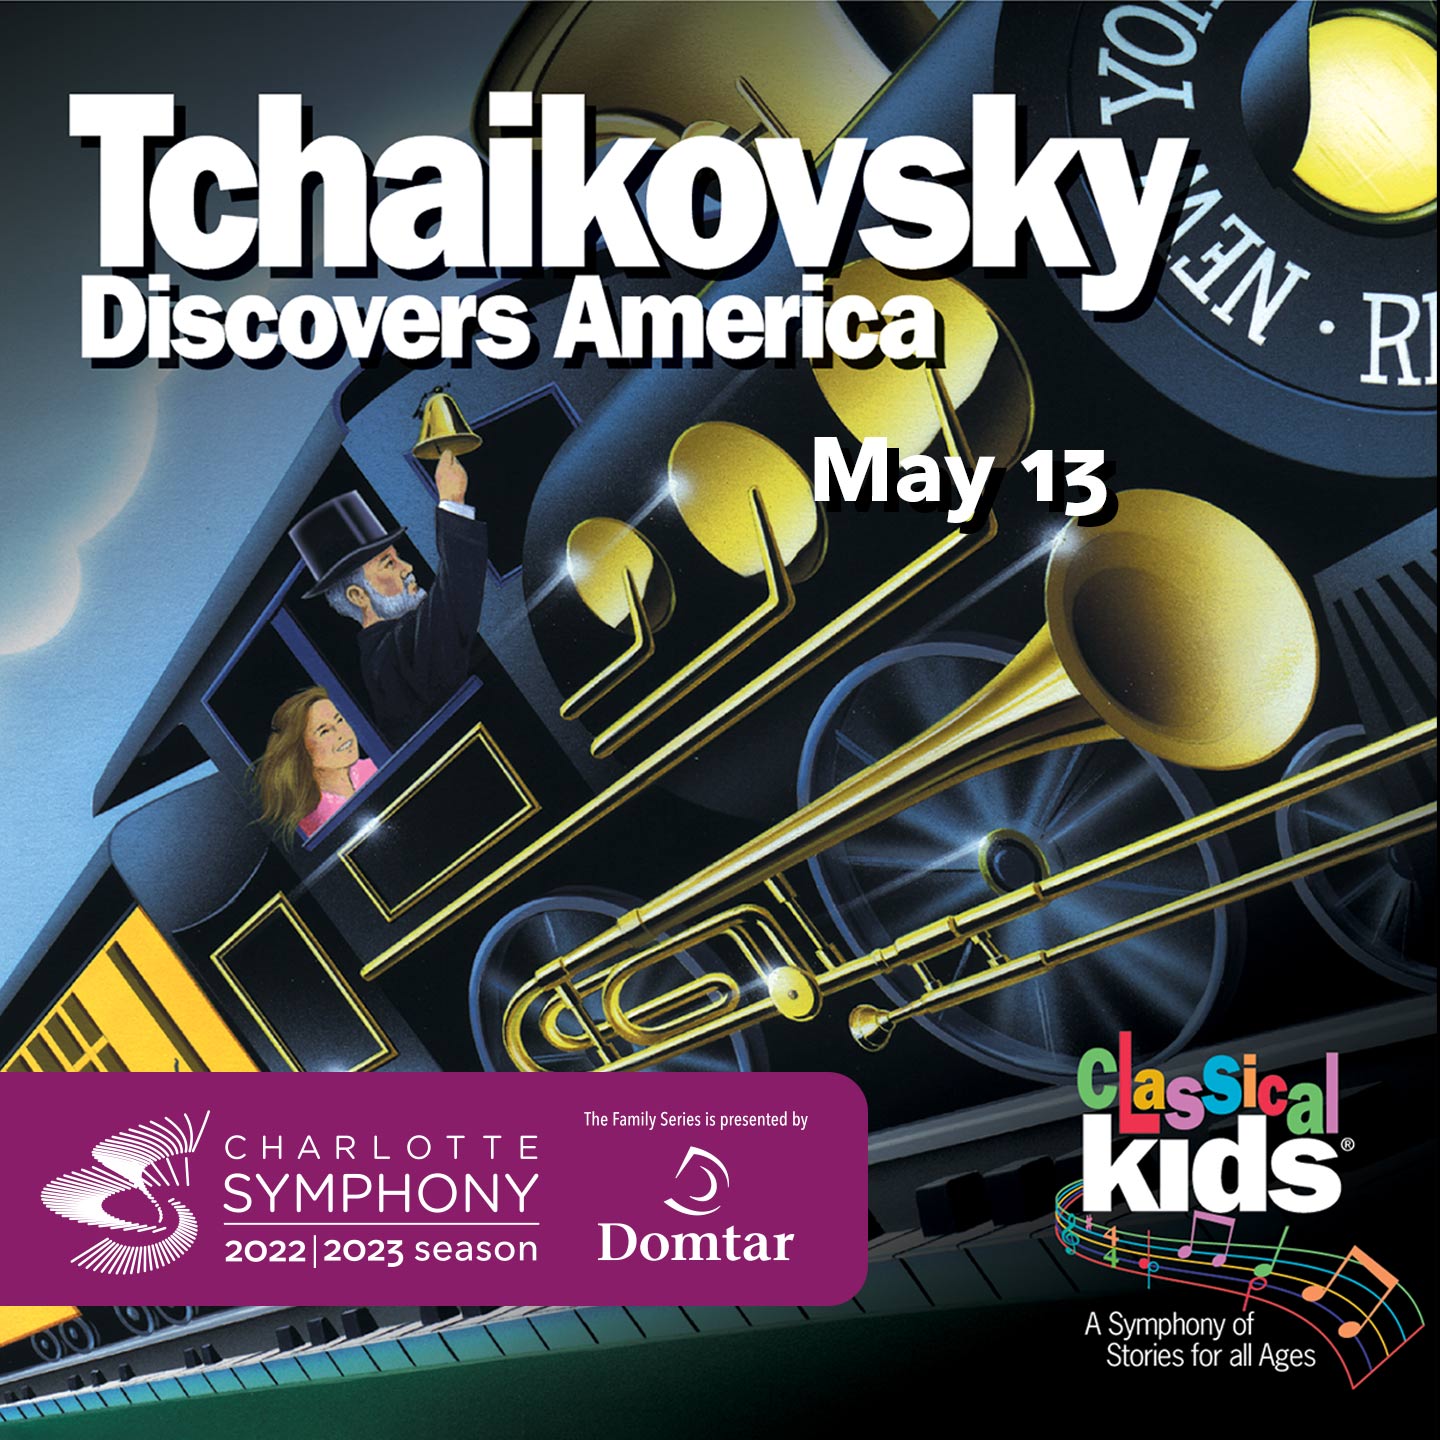 Charlotte Symphony: Classical Kids Live: Tchaikovsky Discovers America